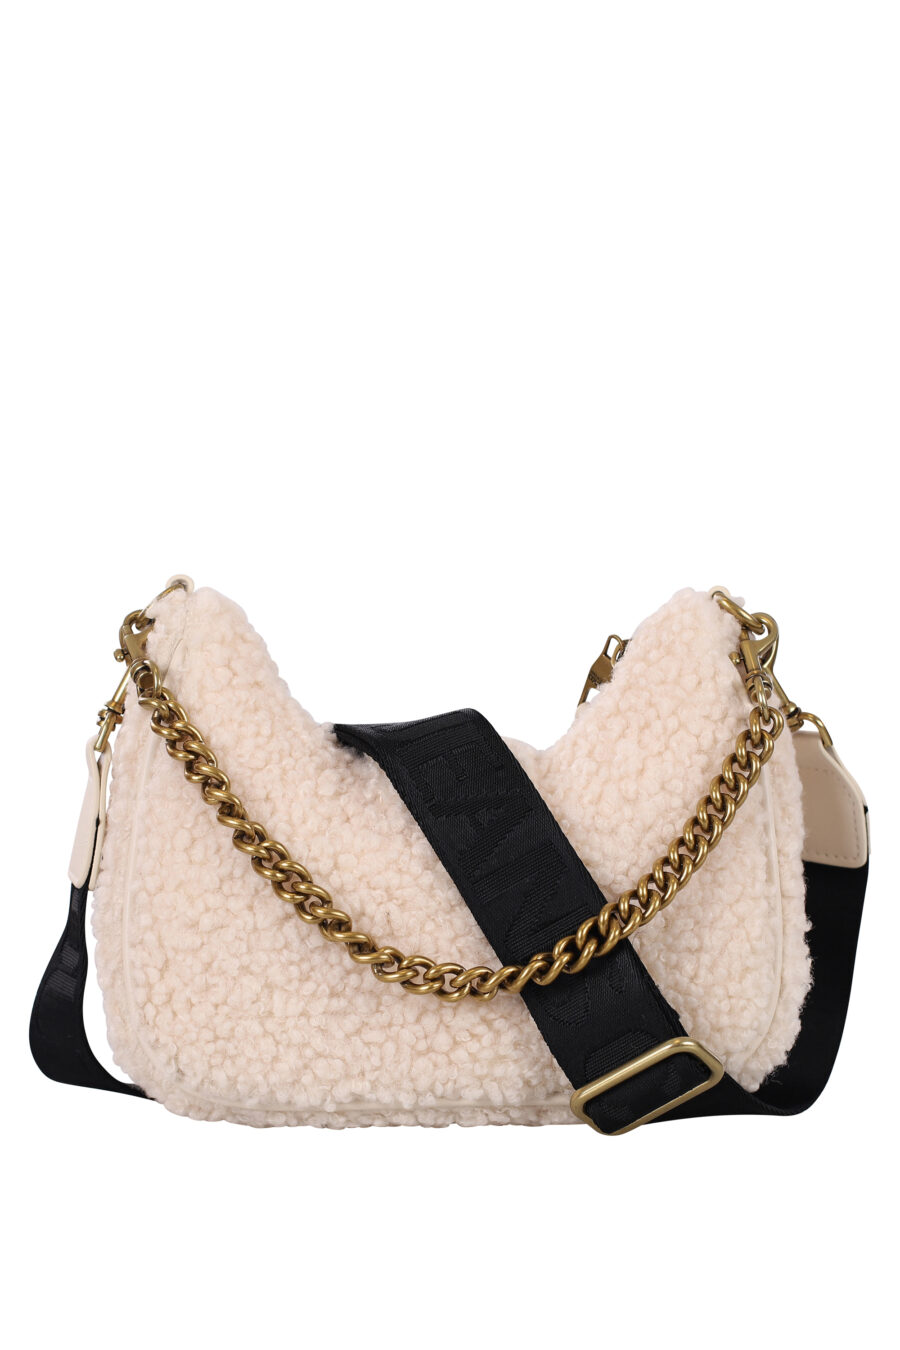 White sheepskin shoulder bag - IMG 0520